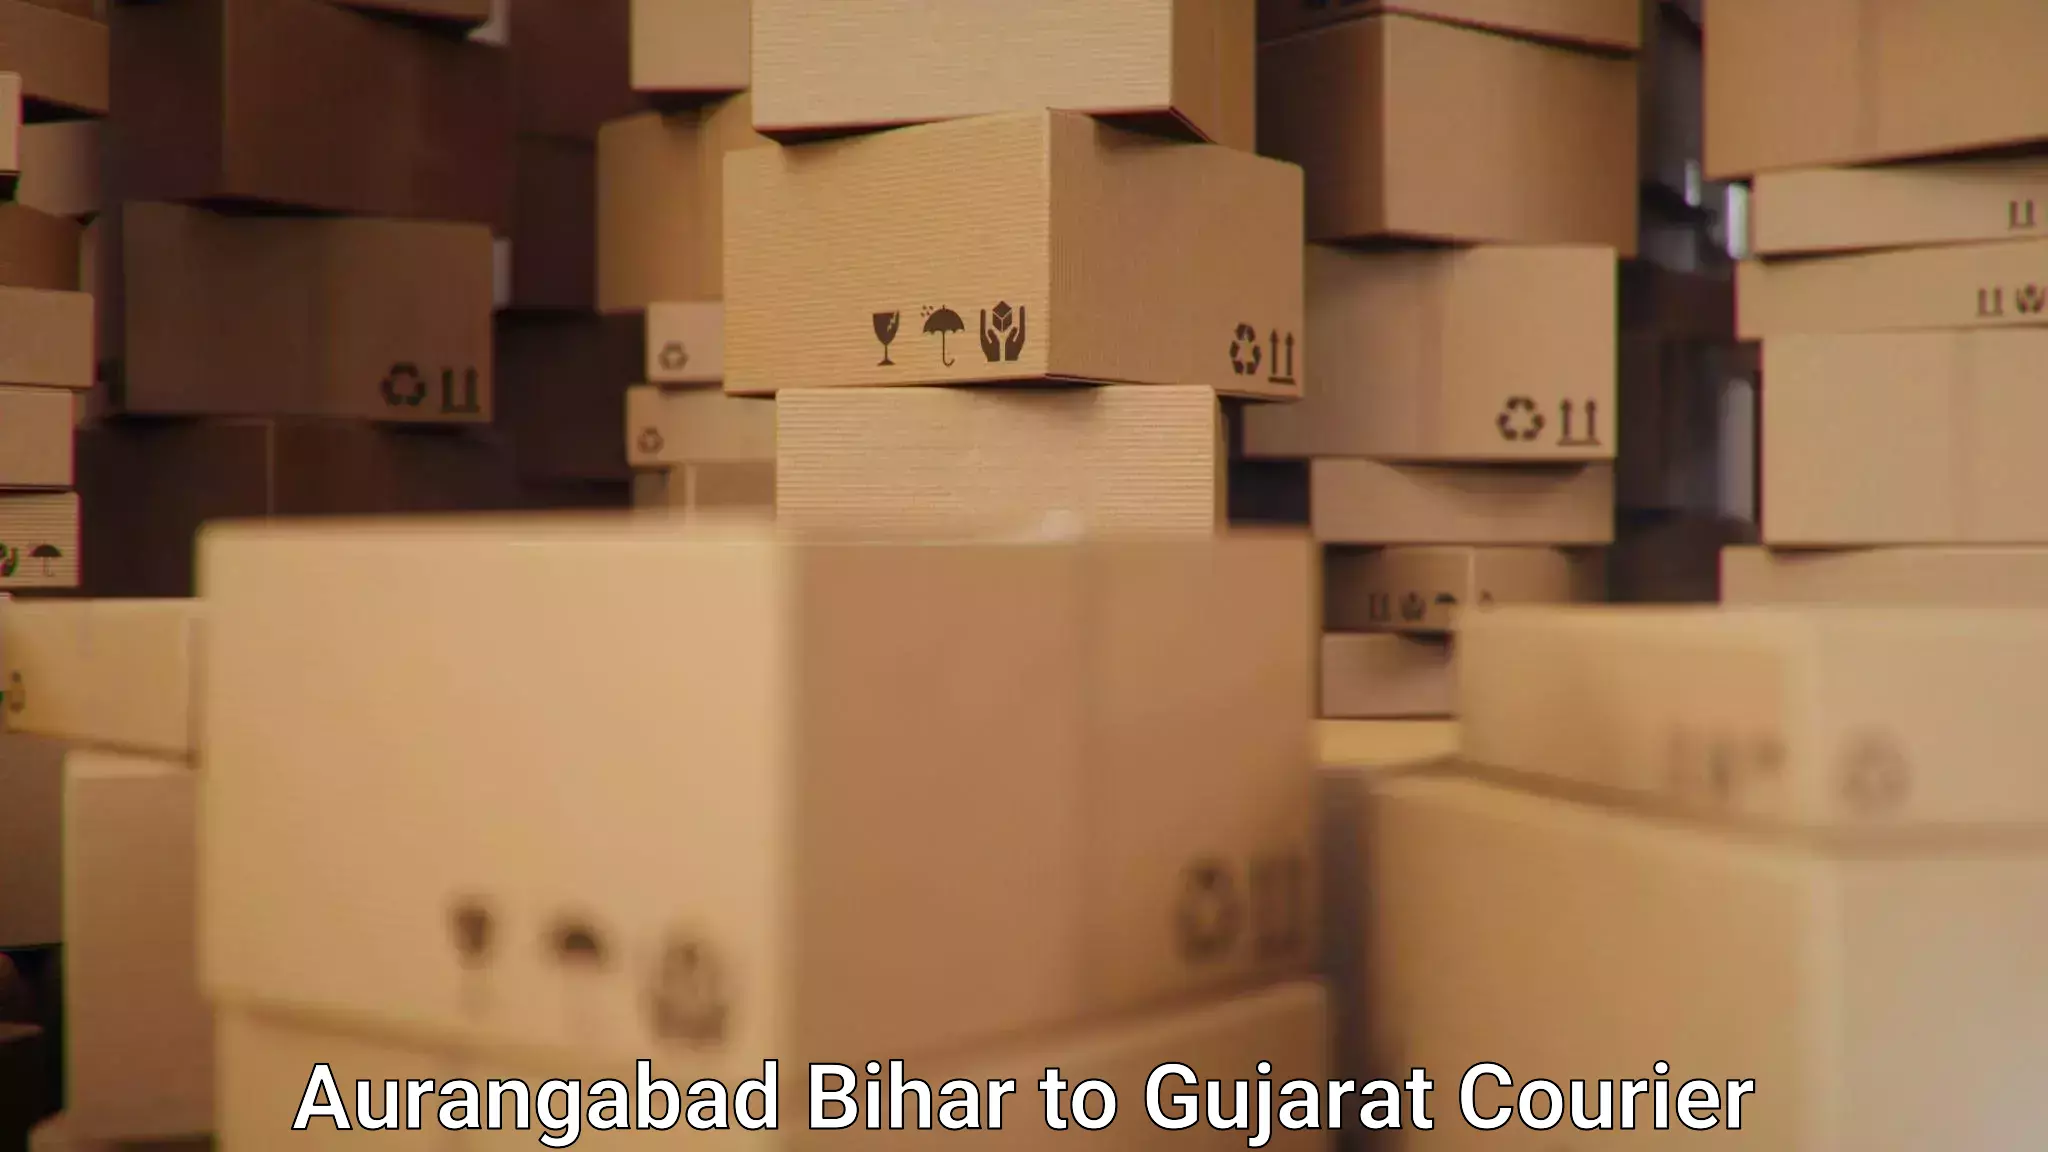 Reliable courier service Aurangabad Bihar to Dahod